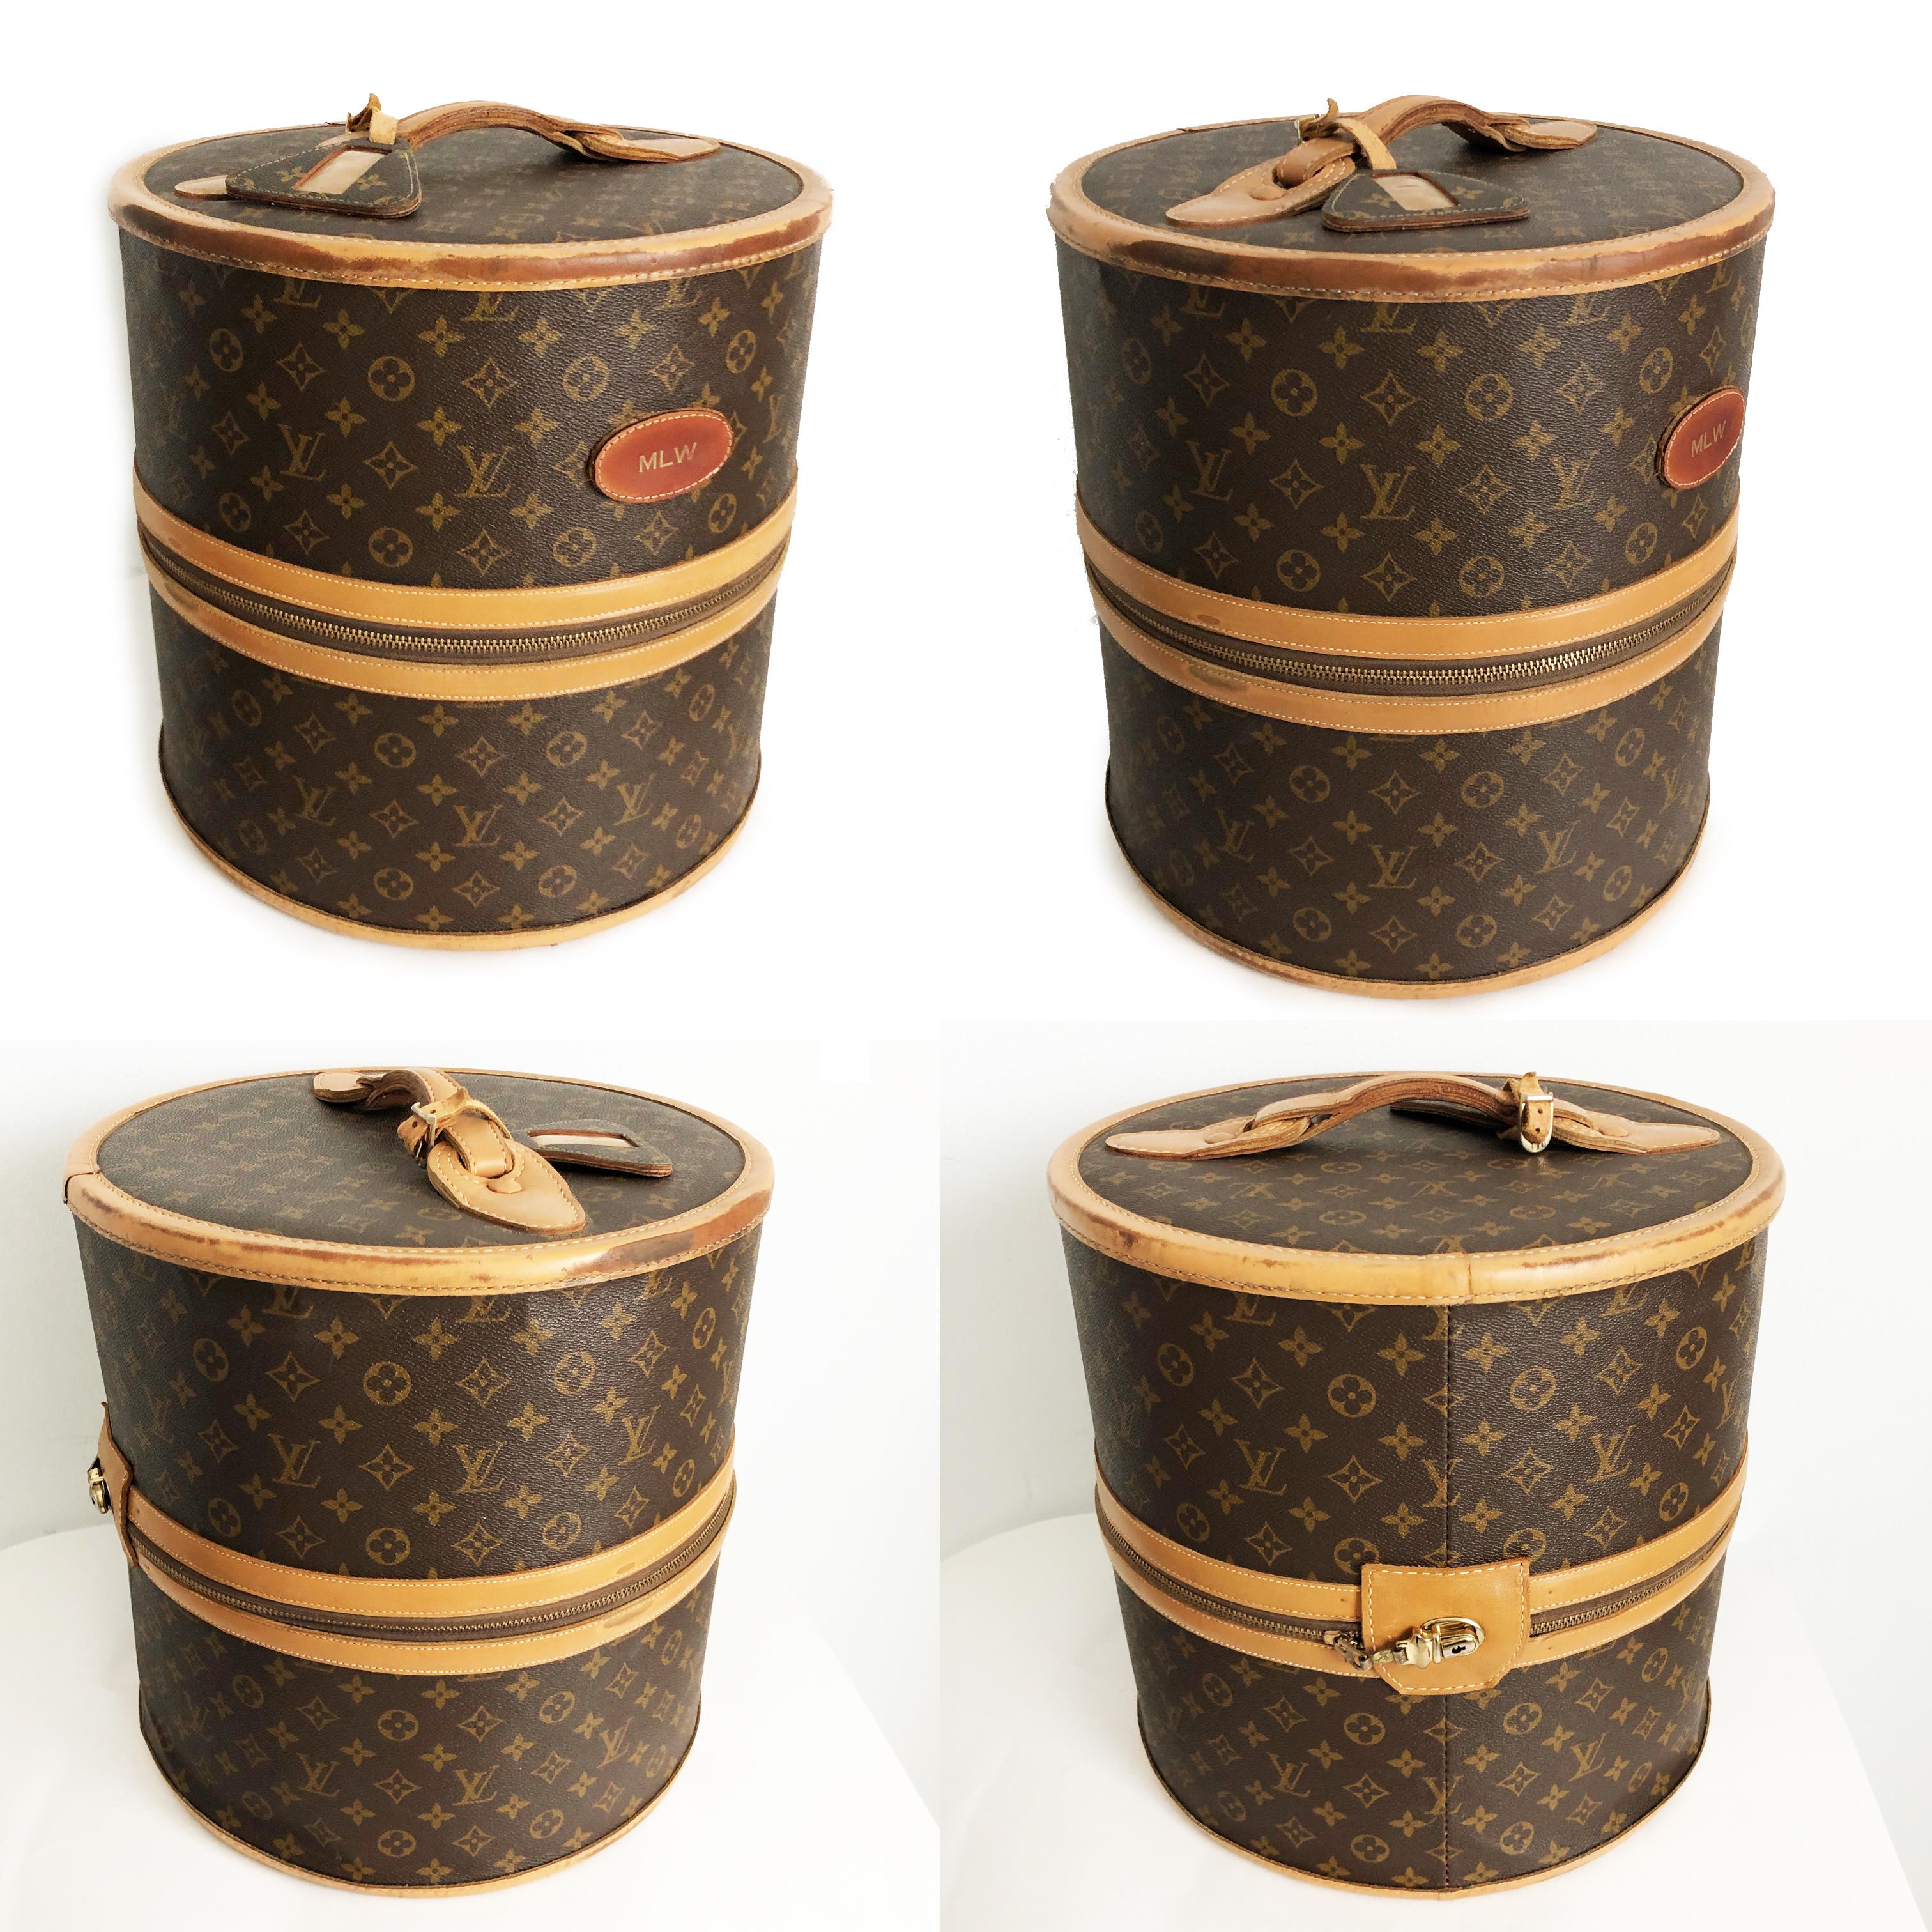 Louis Vuitton Bellevue Handbag 392166, Hat Box round mini bag